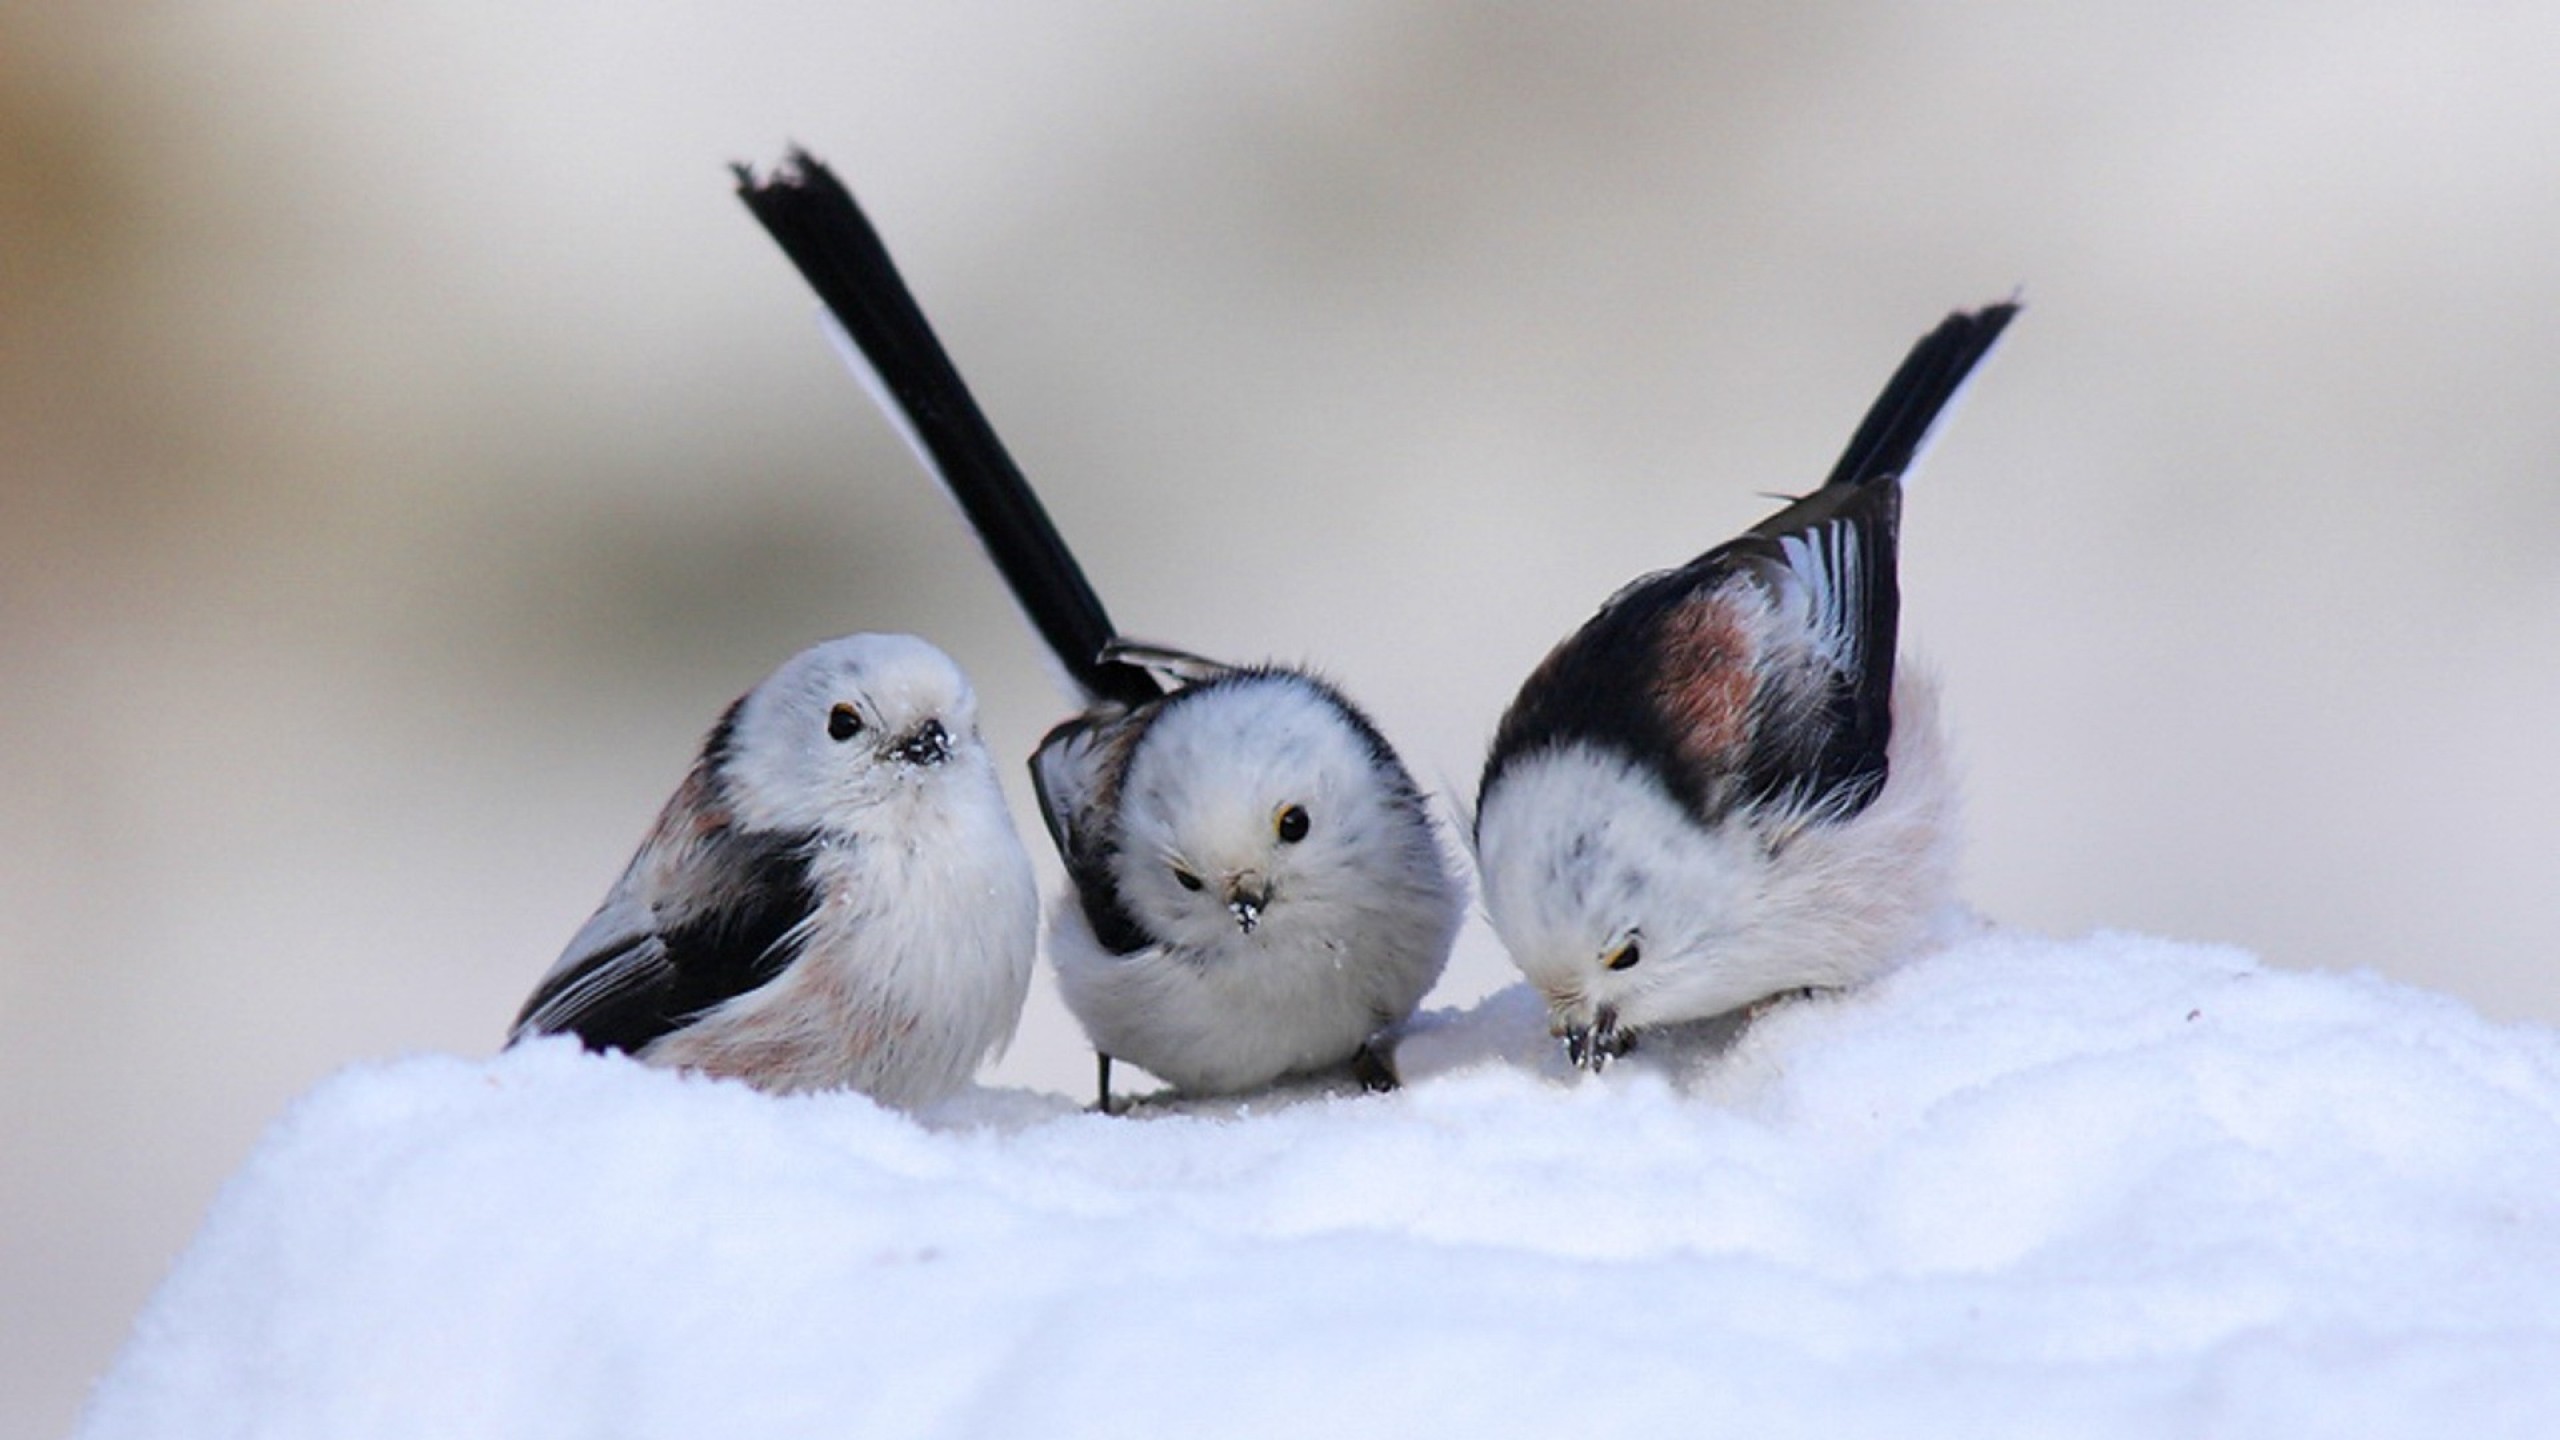 2560x1440 Cute Birds in Winter | Milad Nasri